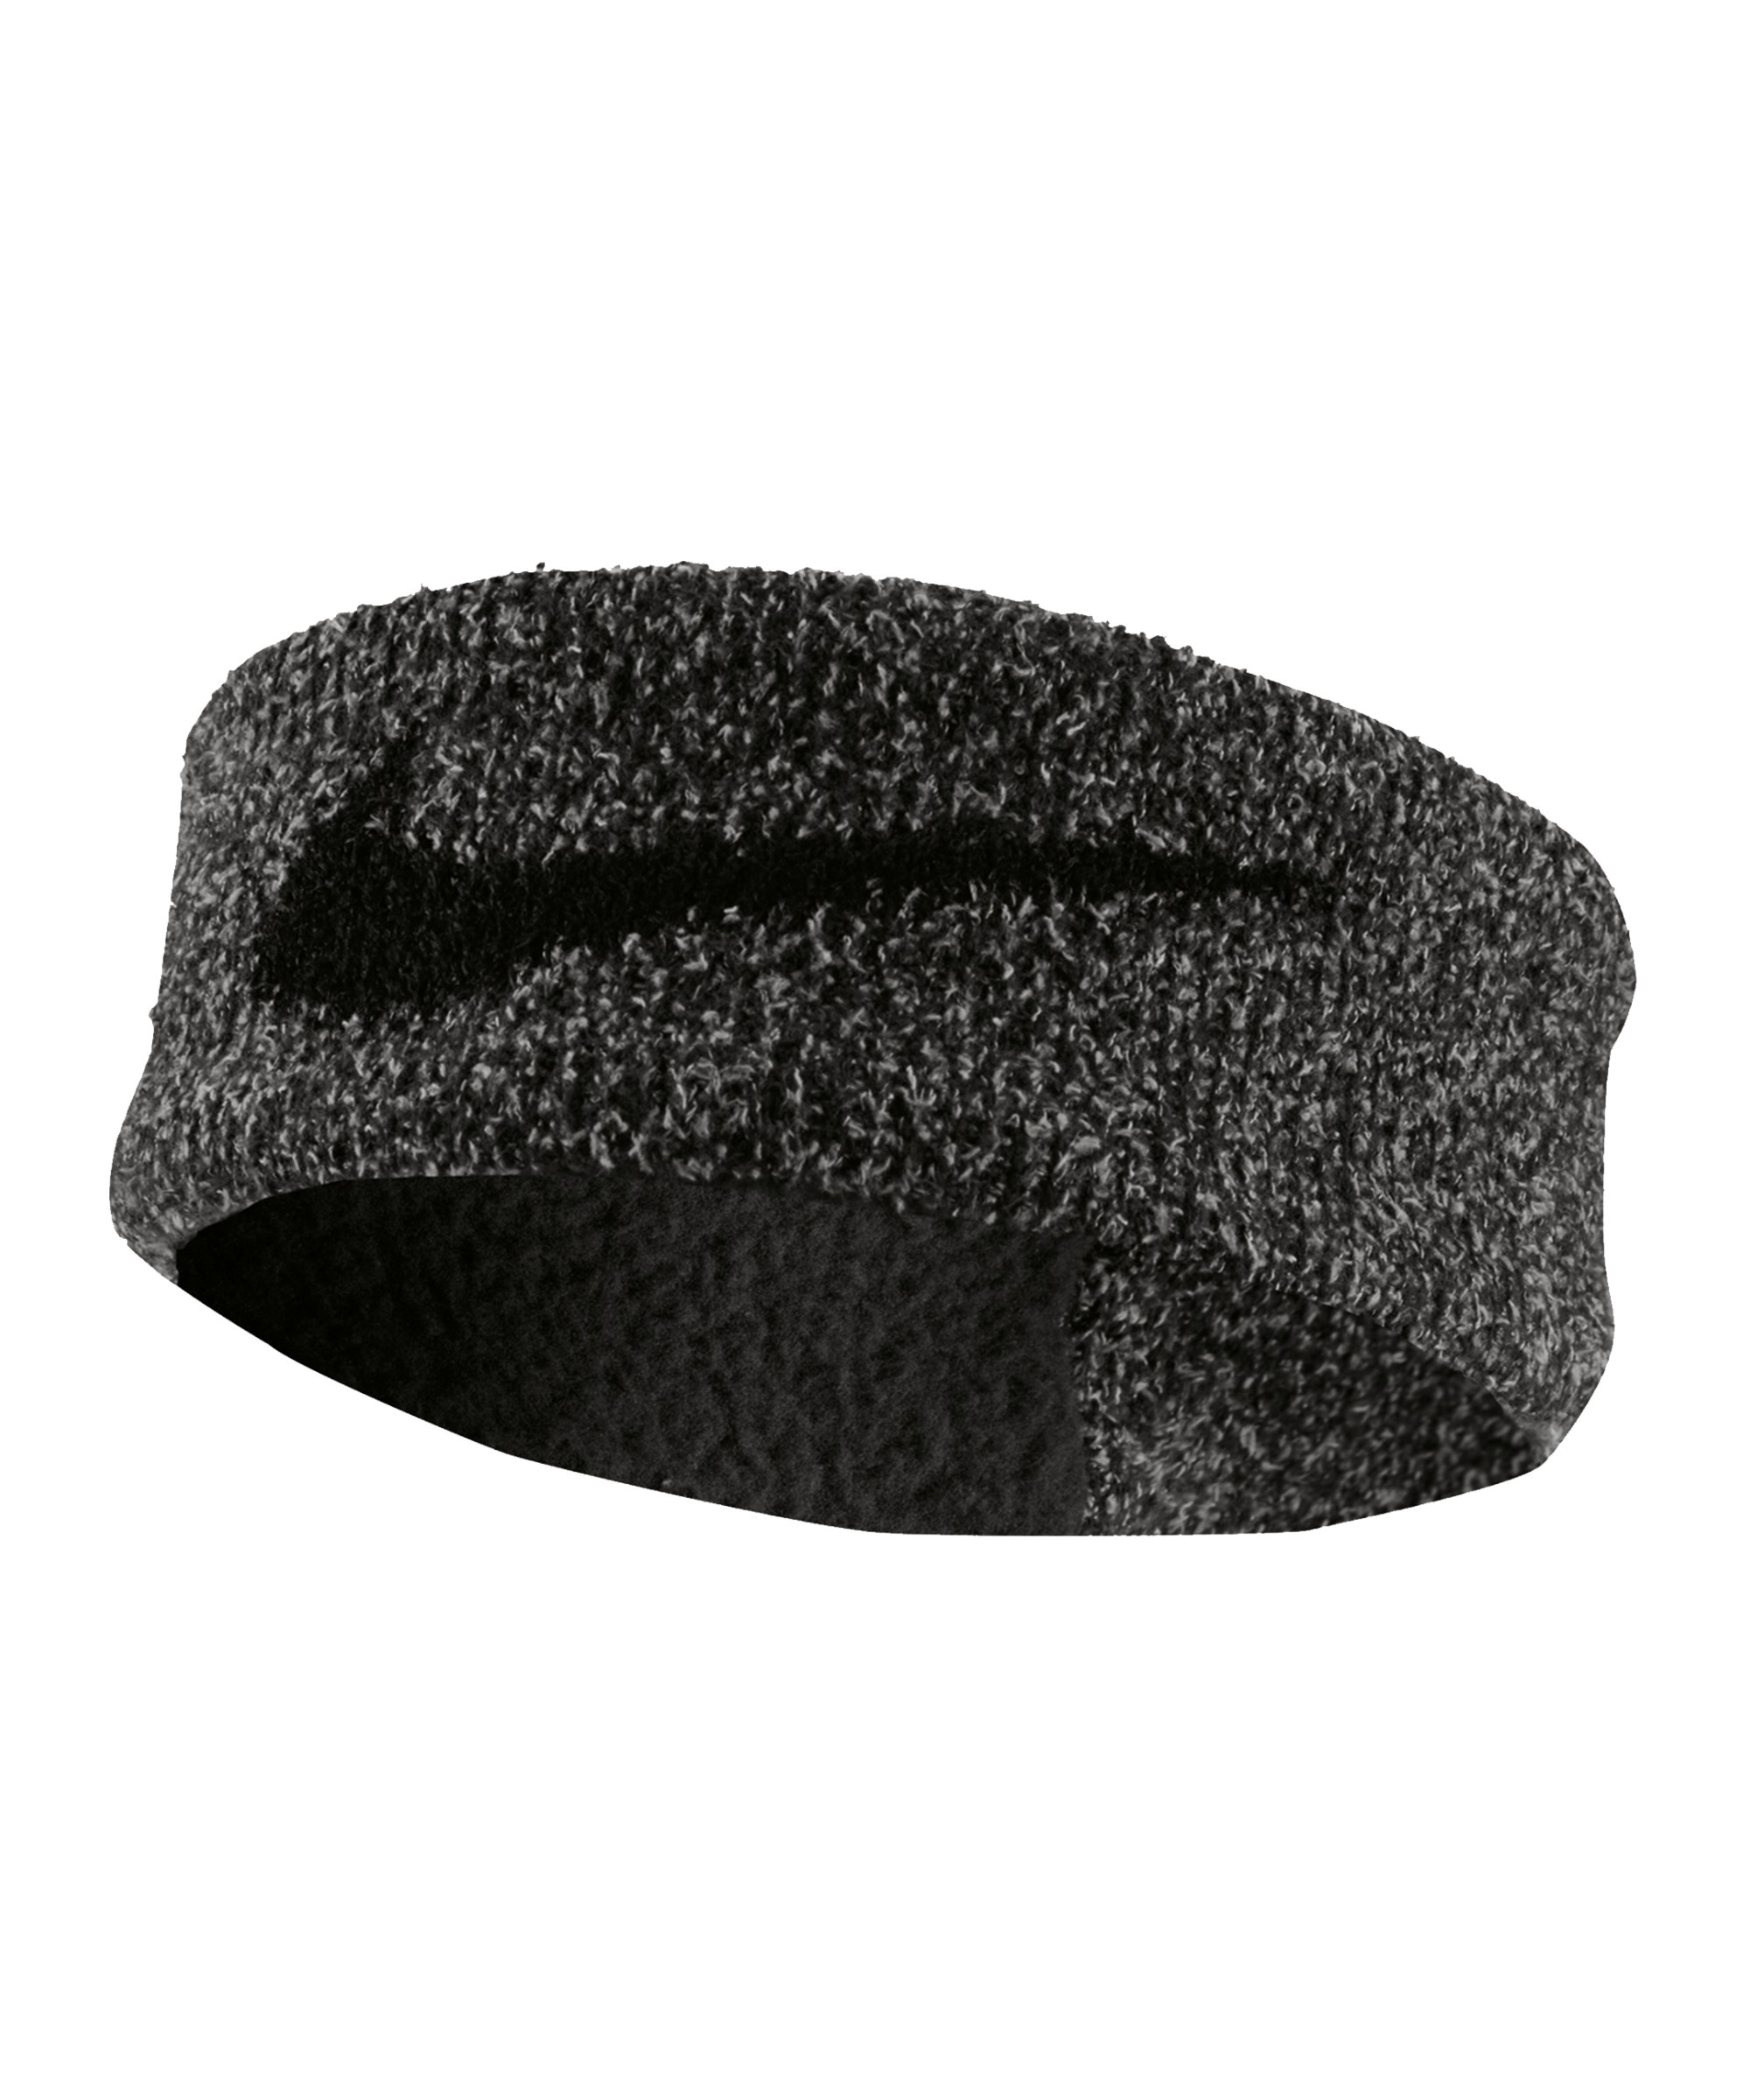 Nike Twist Haarband Damen Schwarz Grau F034 - schwarz